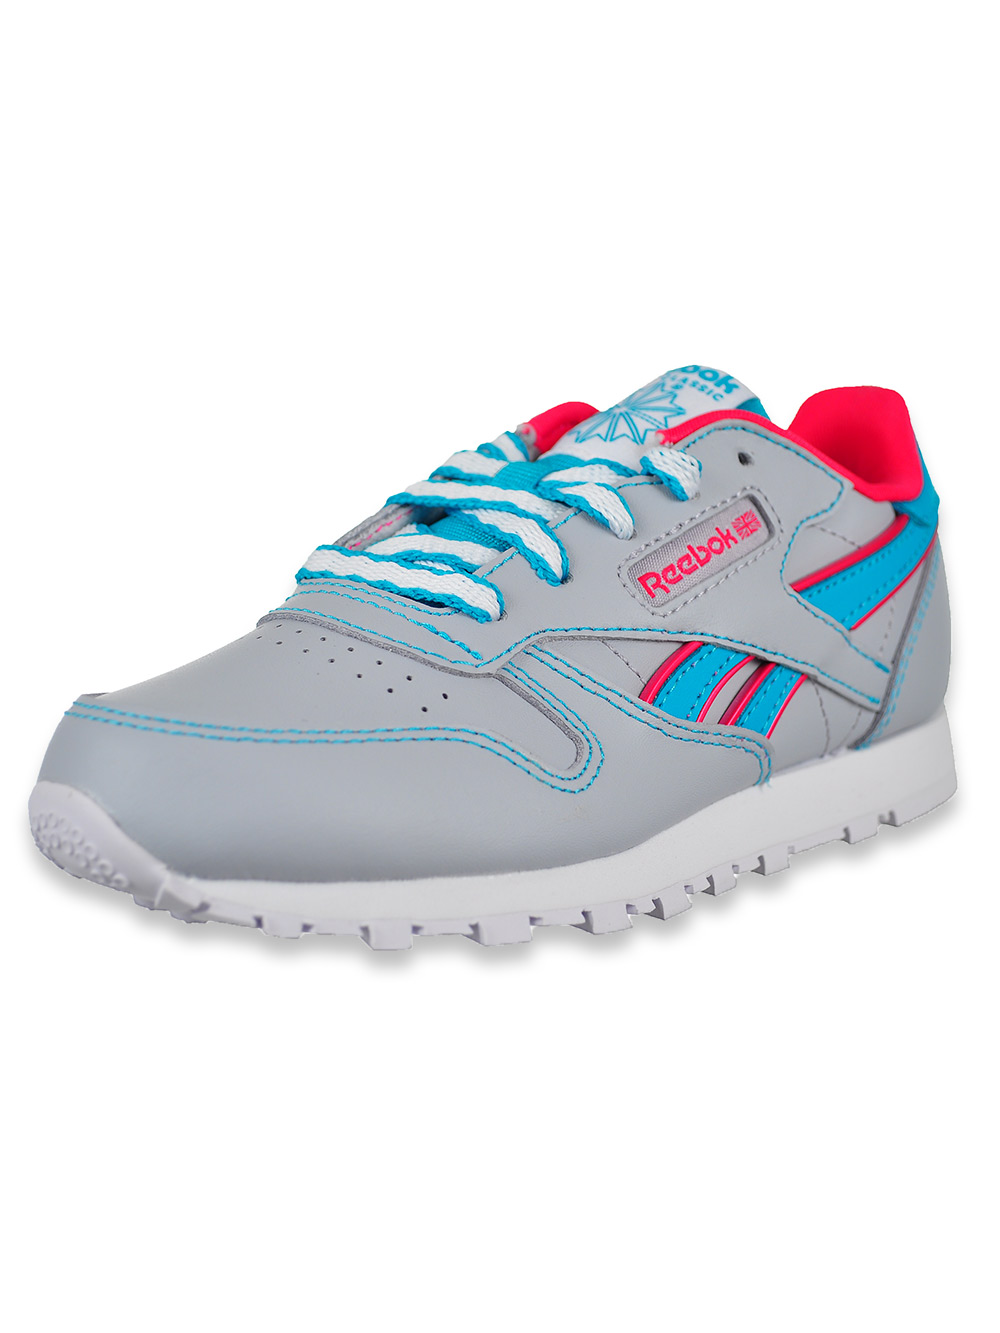 Running Sneakers by Reebok in Gray/pink 